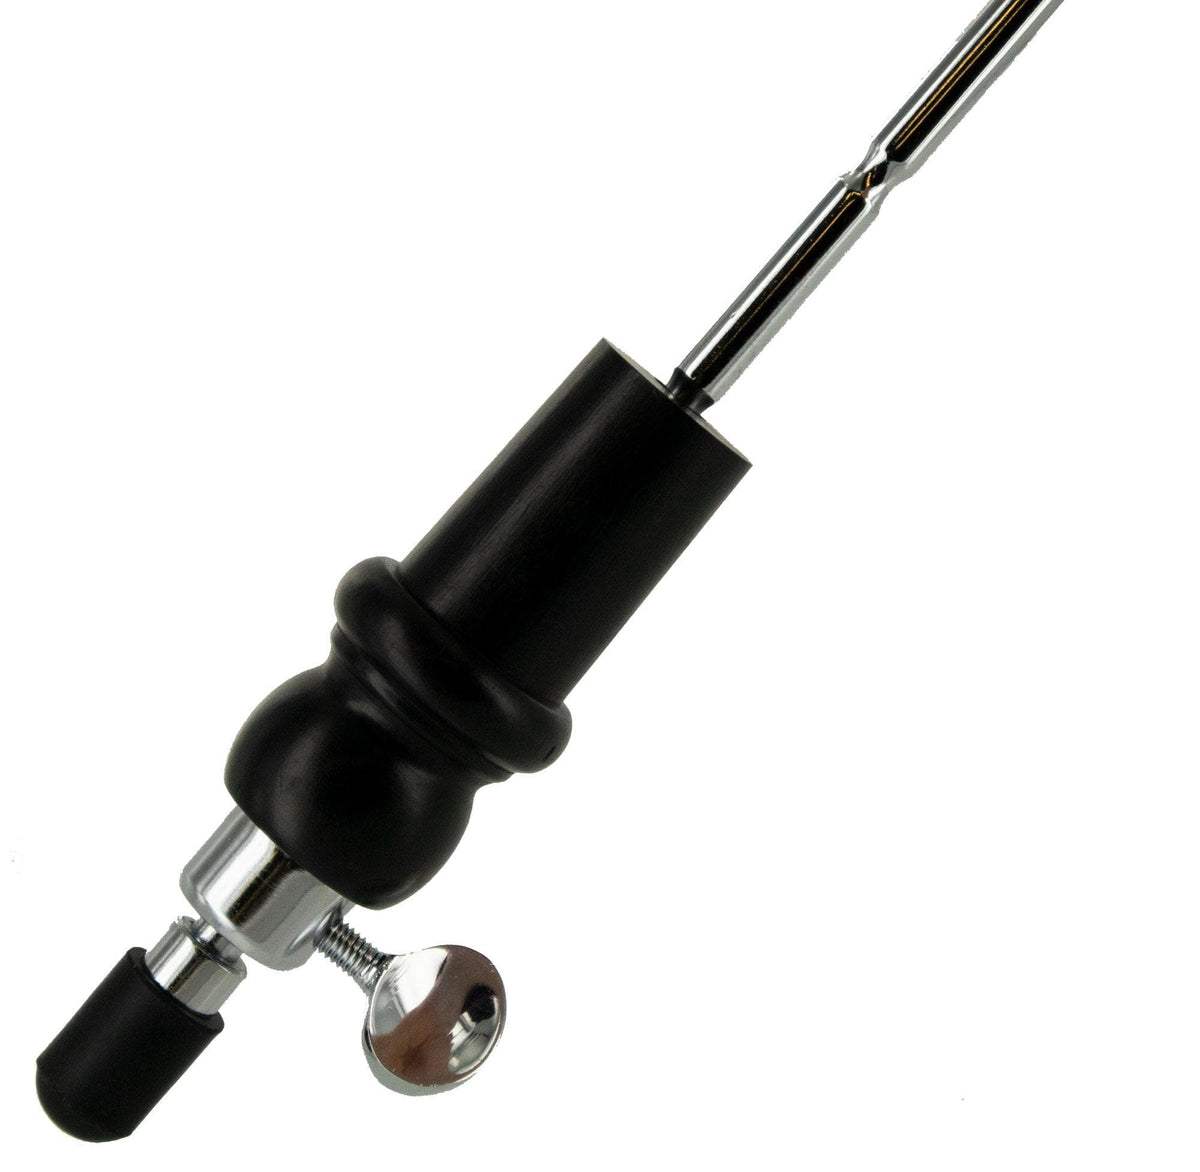 Bass Endpin with Ebony Plug – 12” long, 10mm diameter shaft